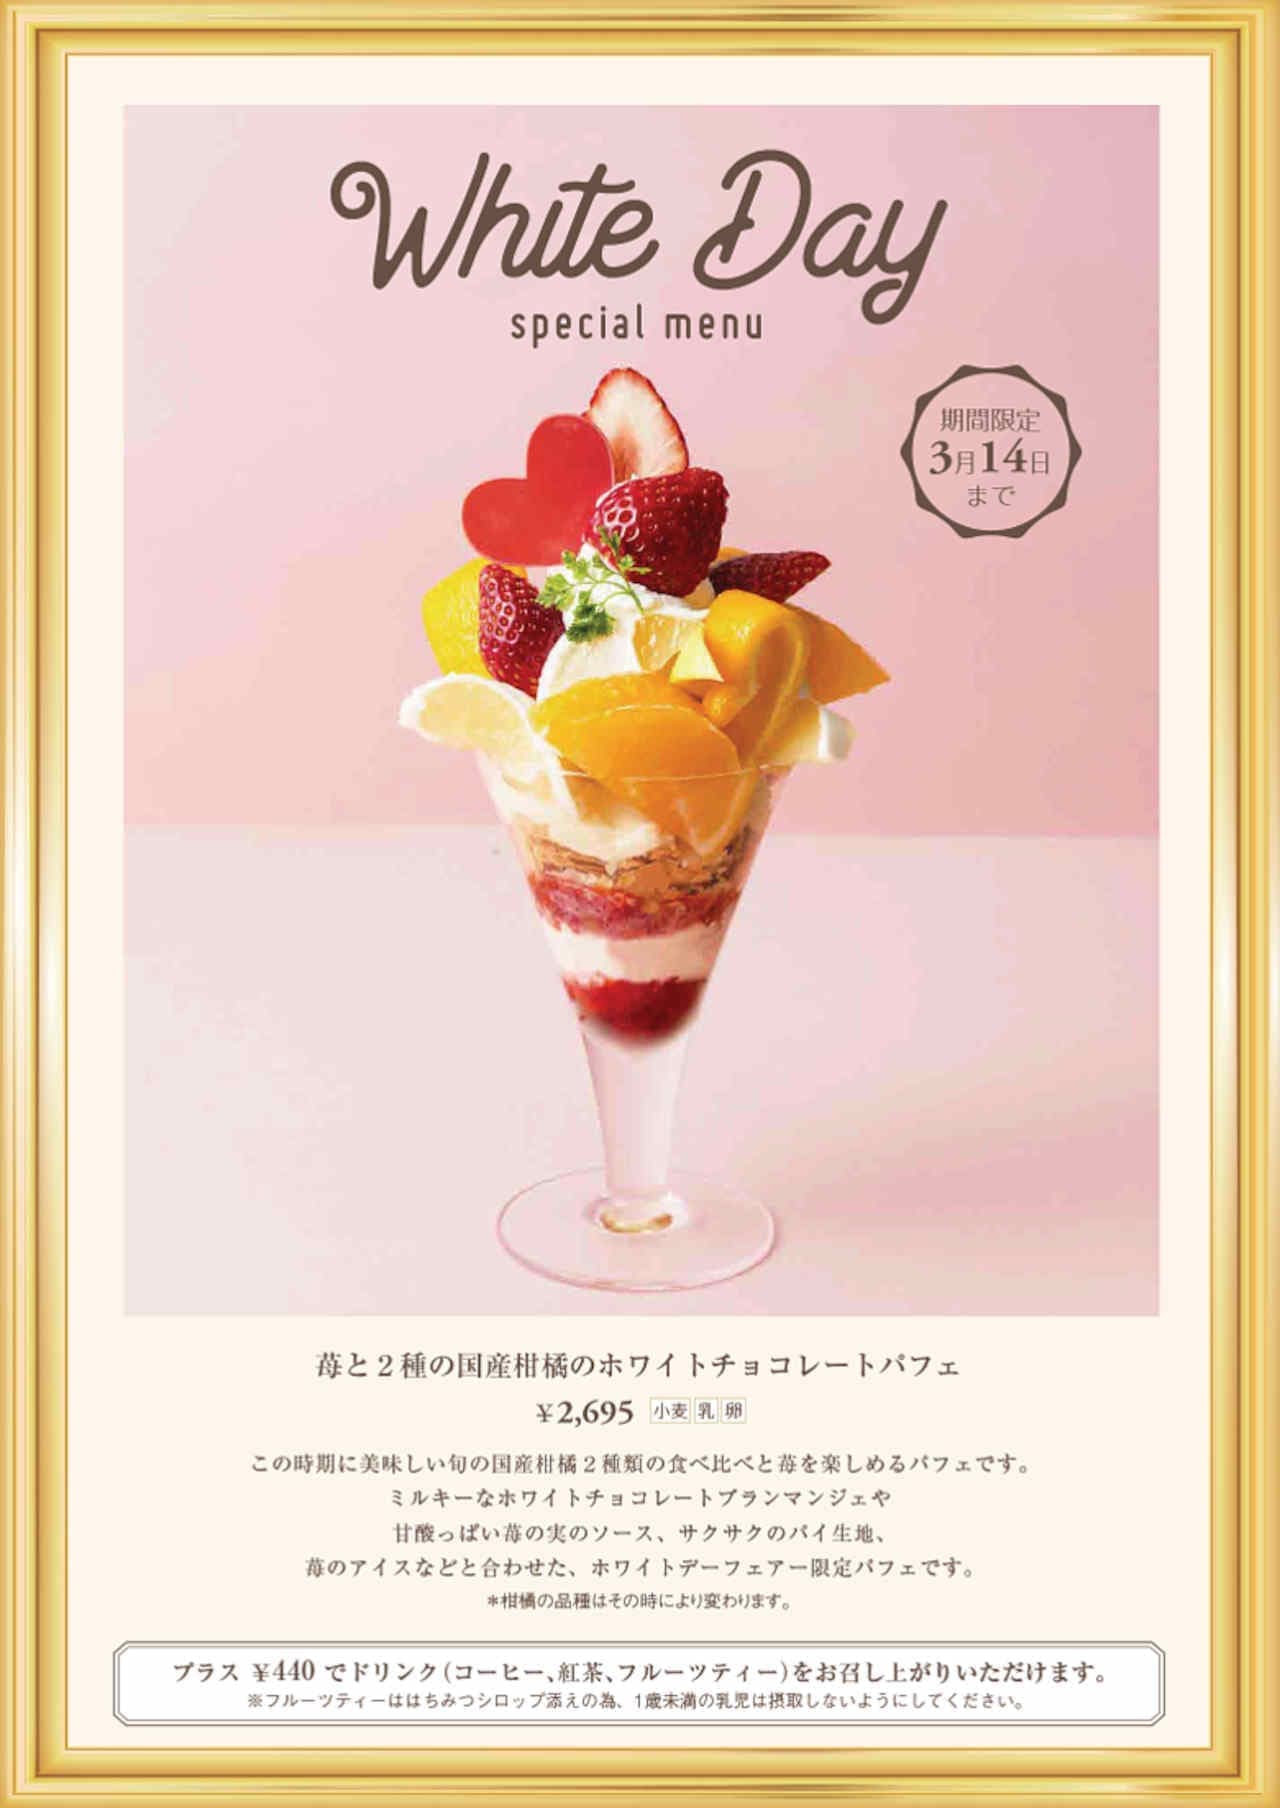 Kyobashi Sembikiya "White chocolate parfait with strawberries and two kinds of Japanese citrus".